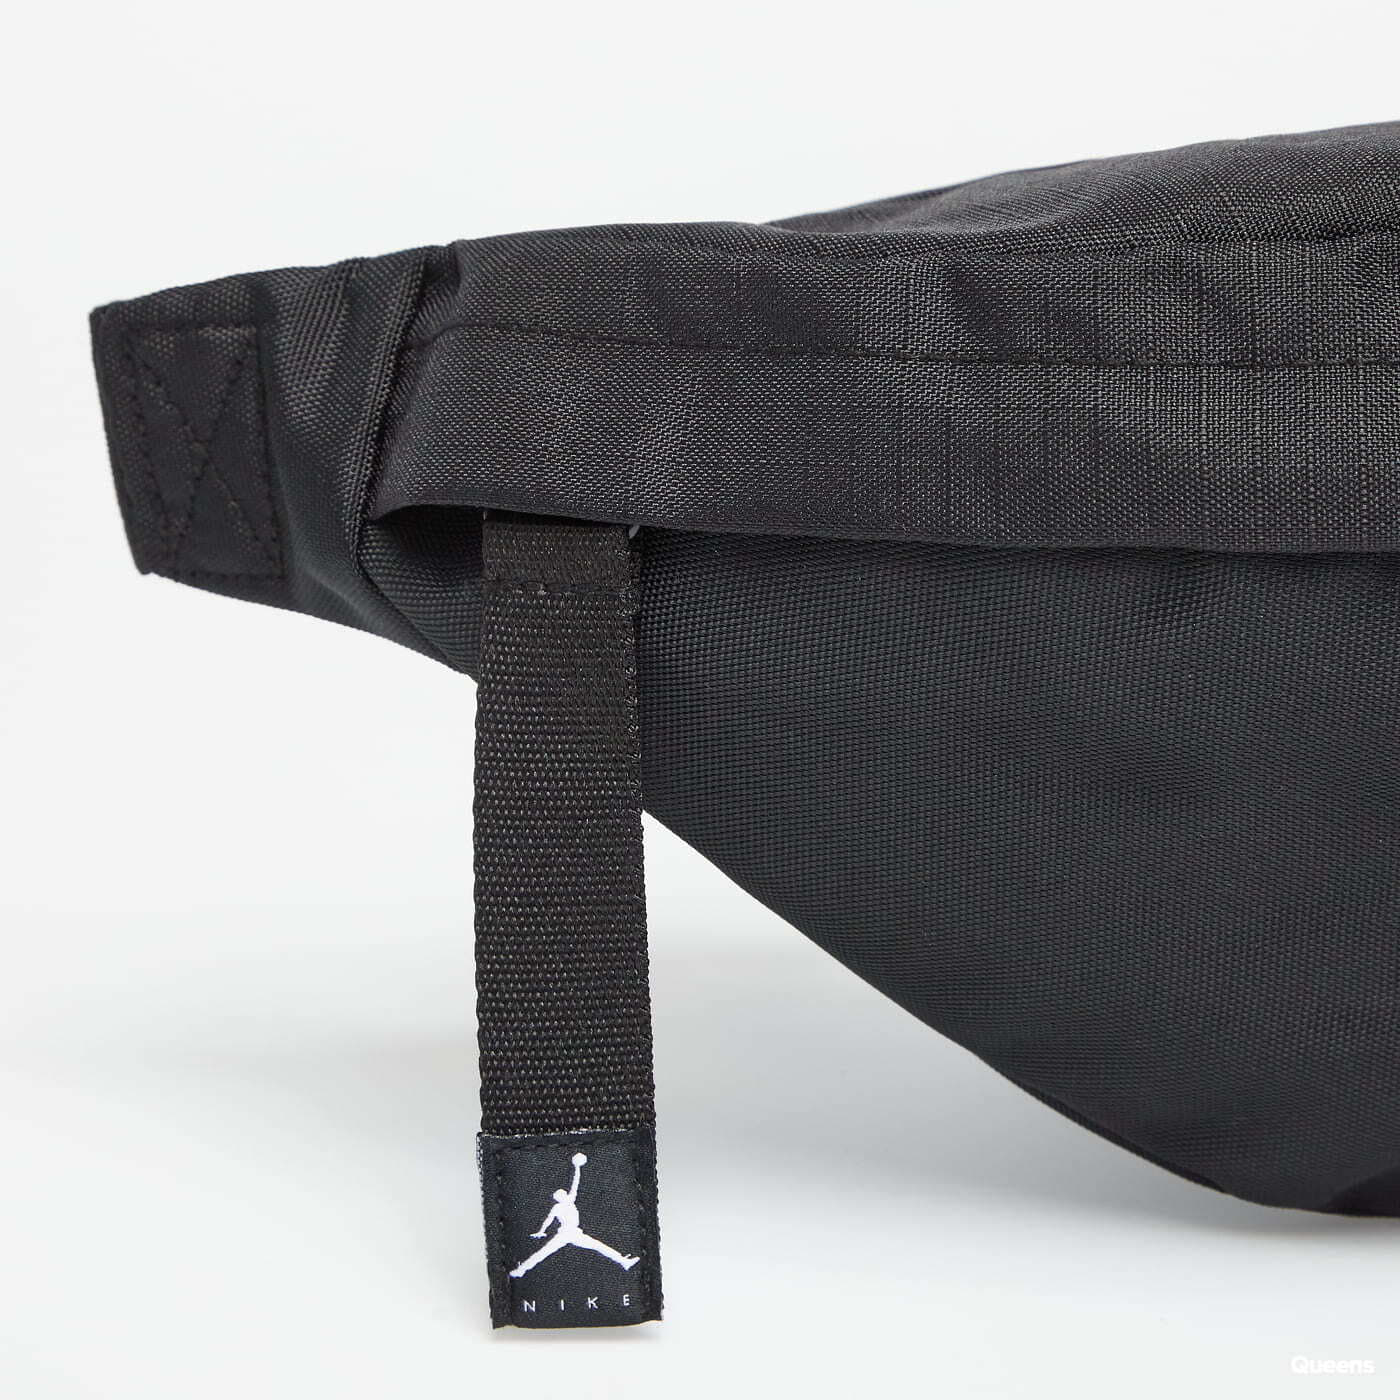 Jordan Jumpman Handbag Bag. Nike LU